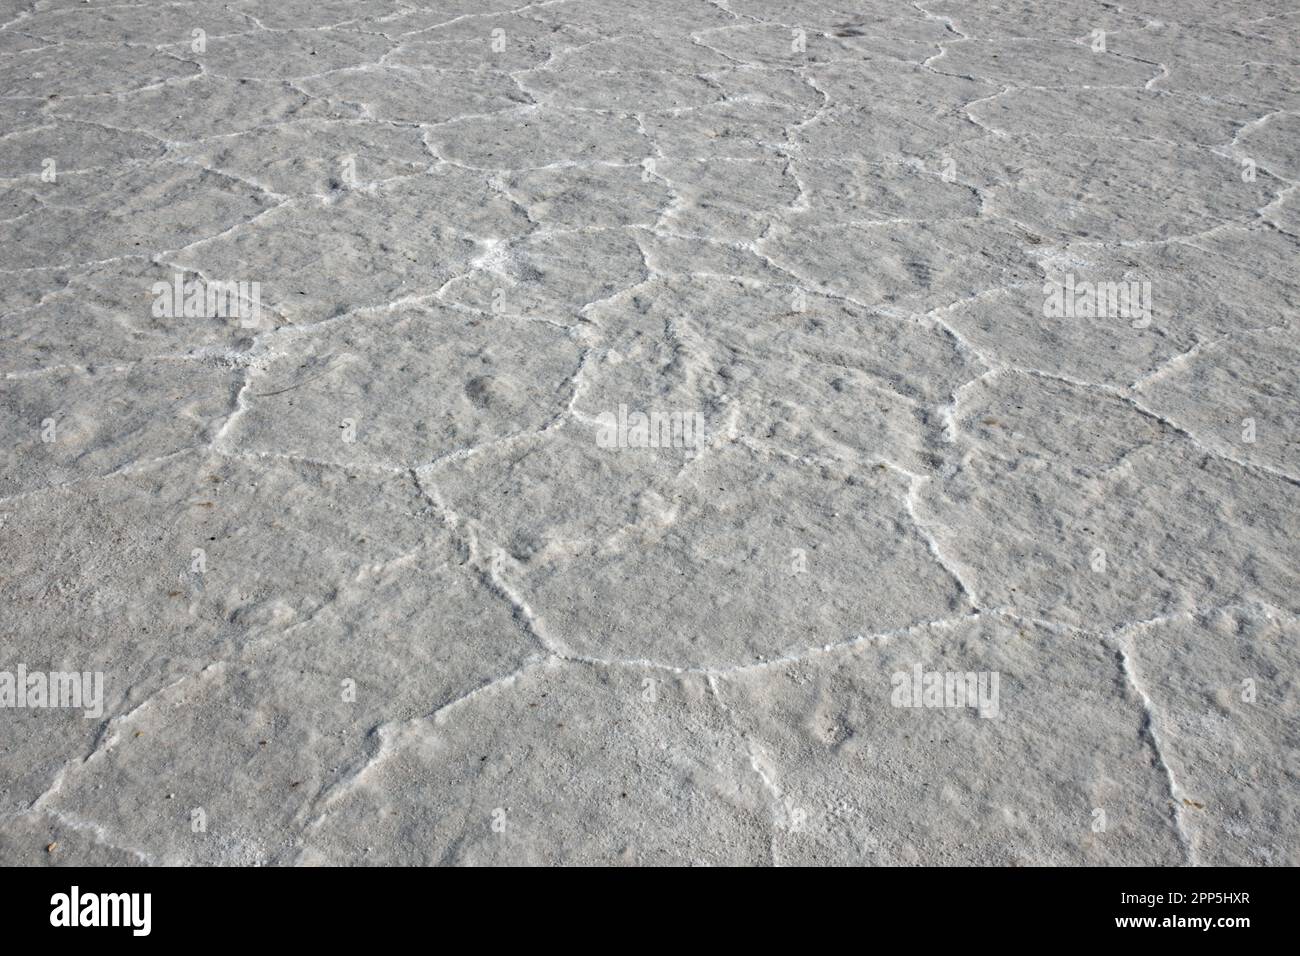 A close-up photo of the crystallized salt surface of Salar de Uyuni, Bolivia Stock Photo